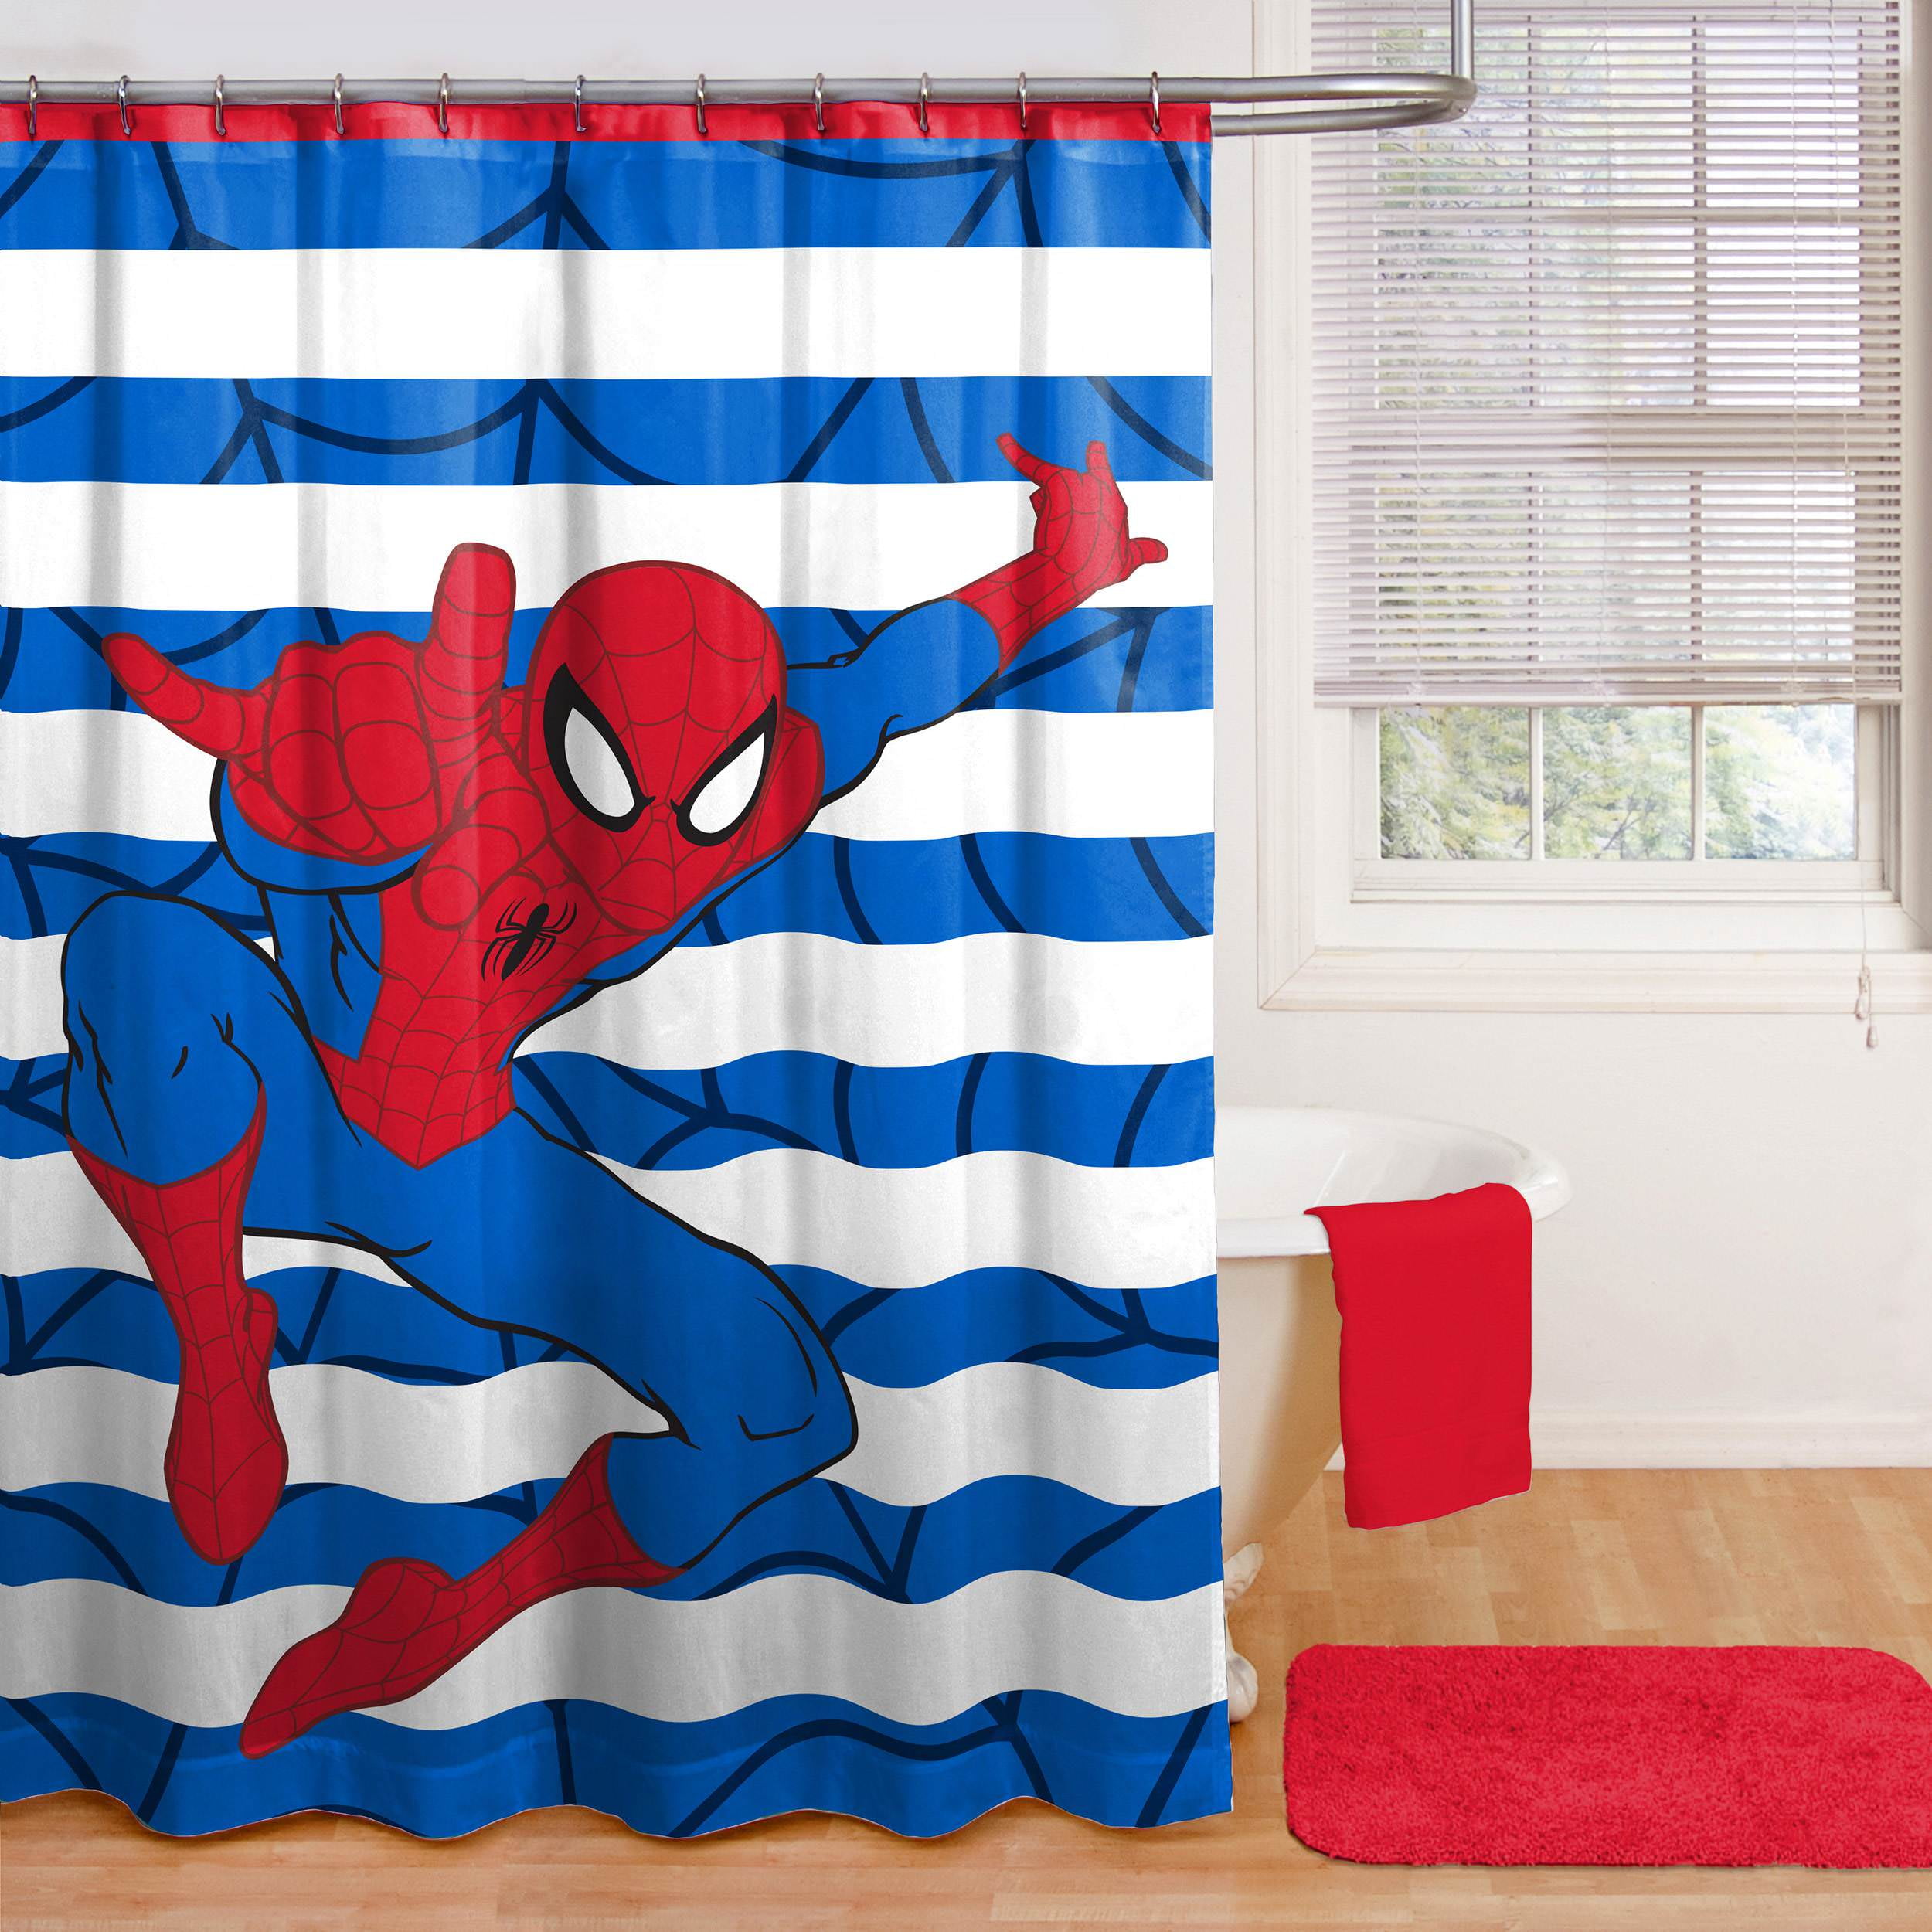 3D Shower Curtain Art Bathroom Decor Spiderman Full Printed Design Curtains 